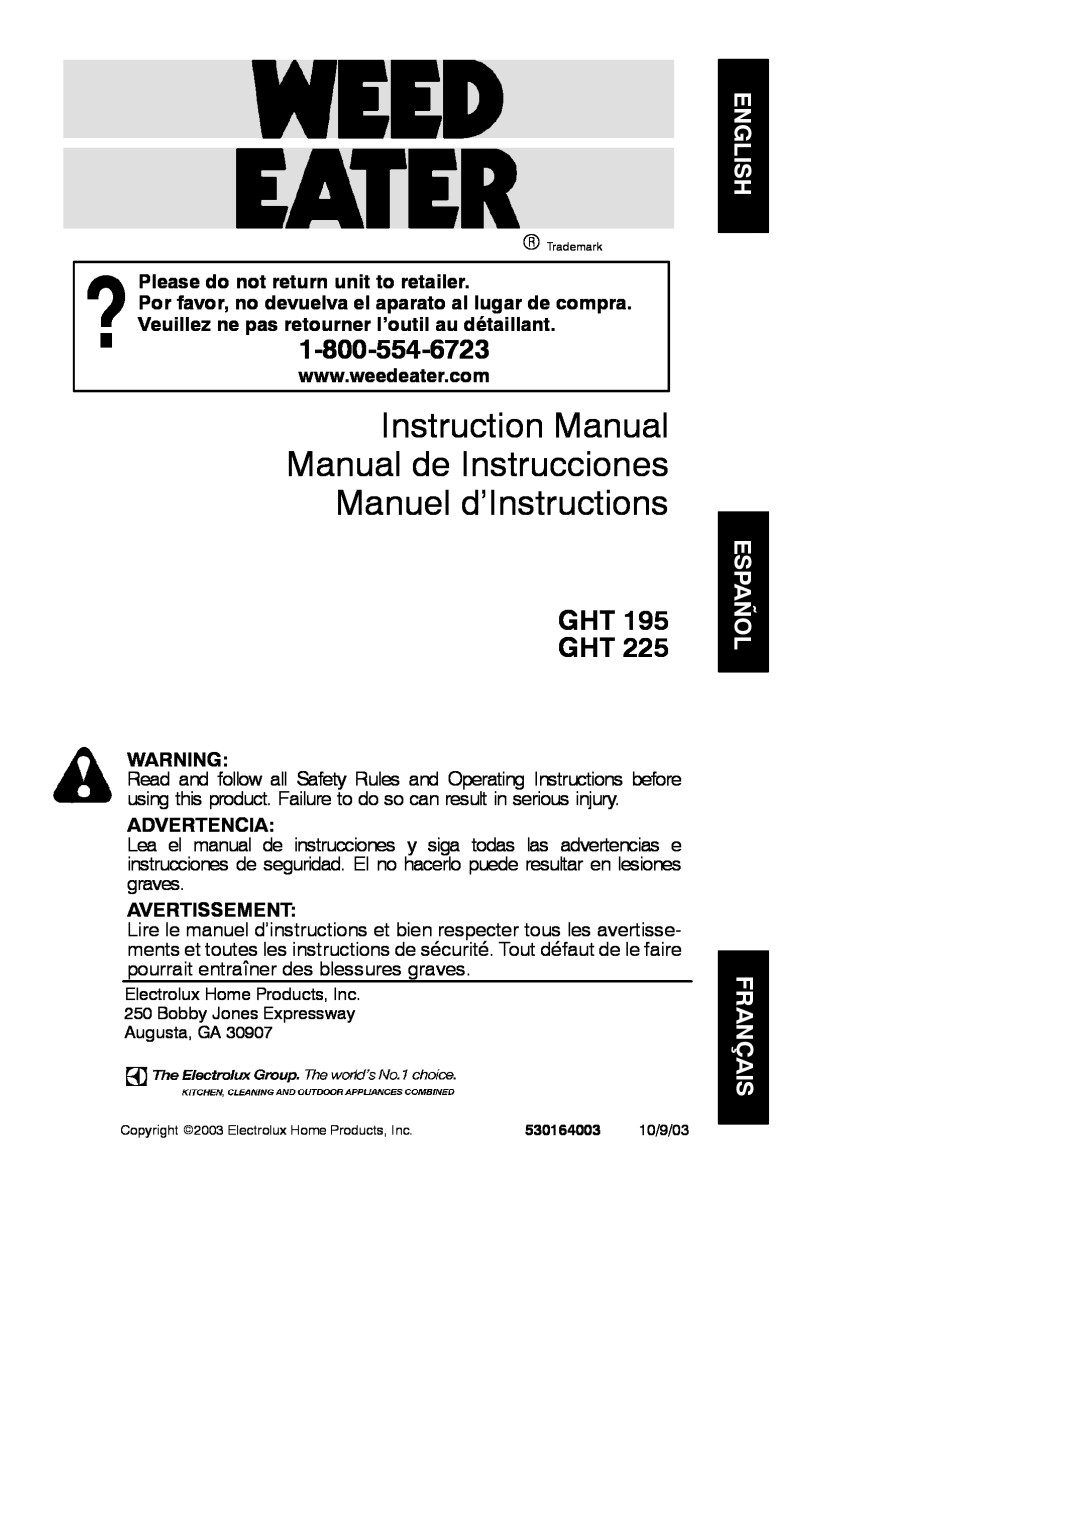 Poulan GHT 195 instruction manual English Español Français, Please do not return unit to retailer, Advertencia, Ght Ght 